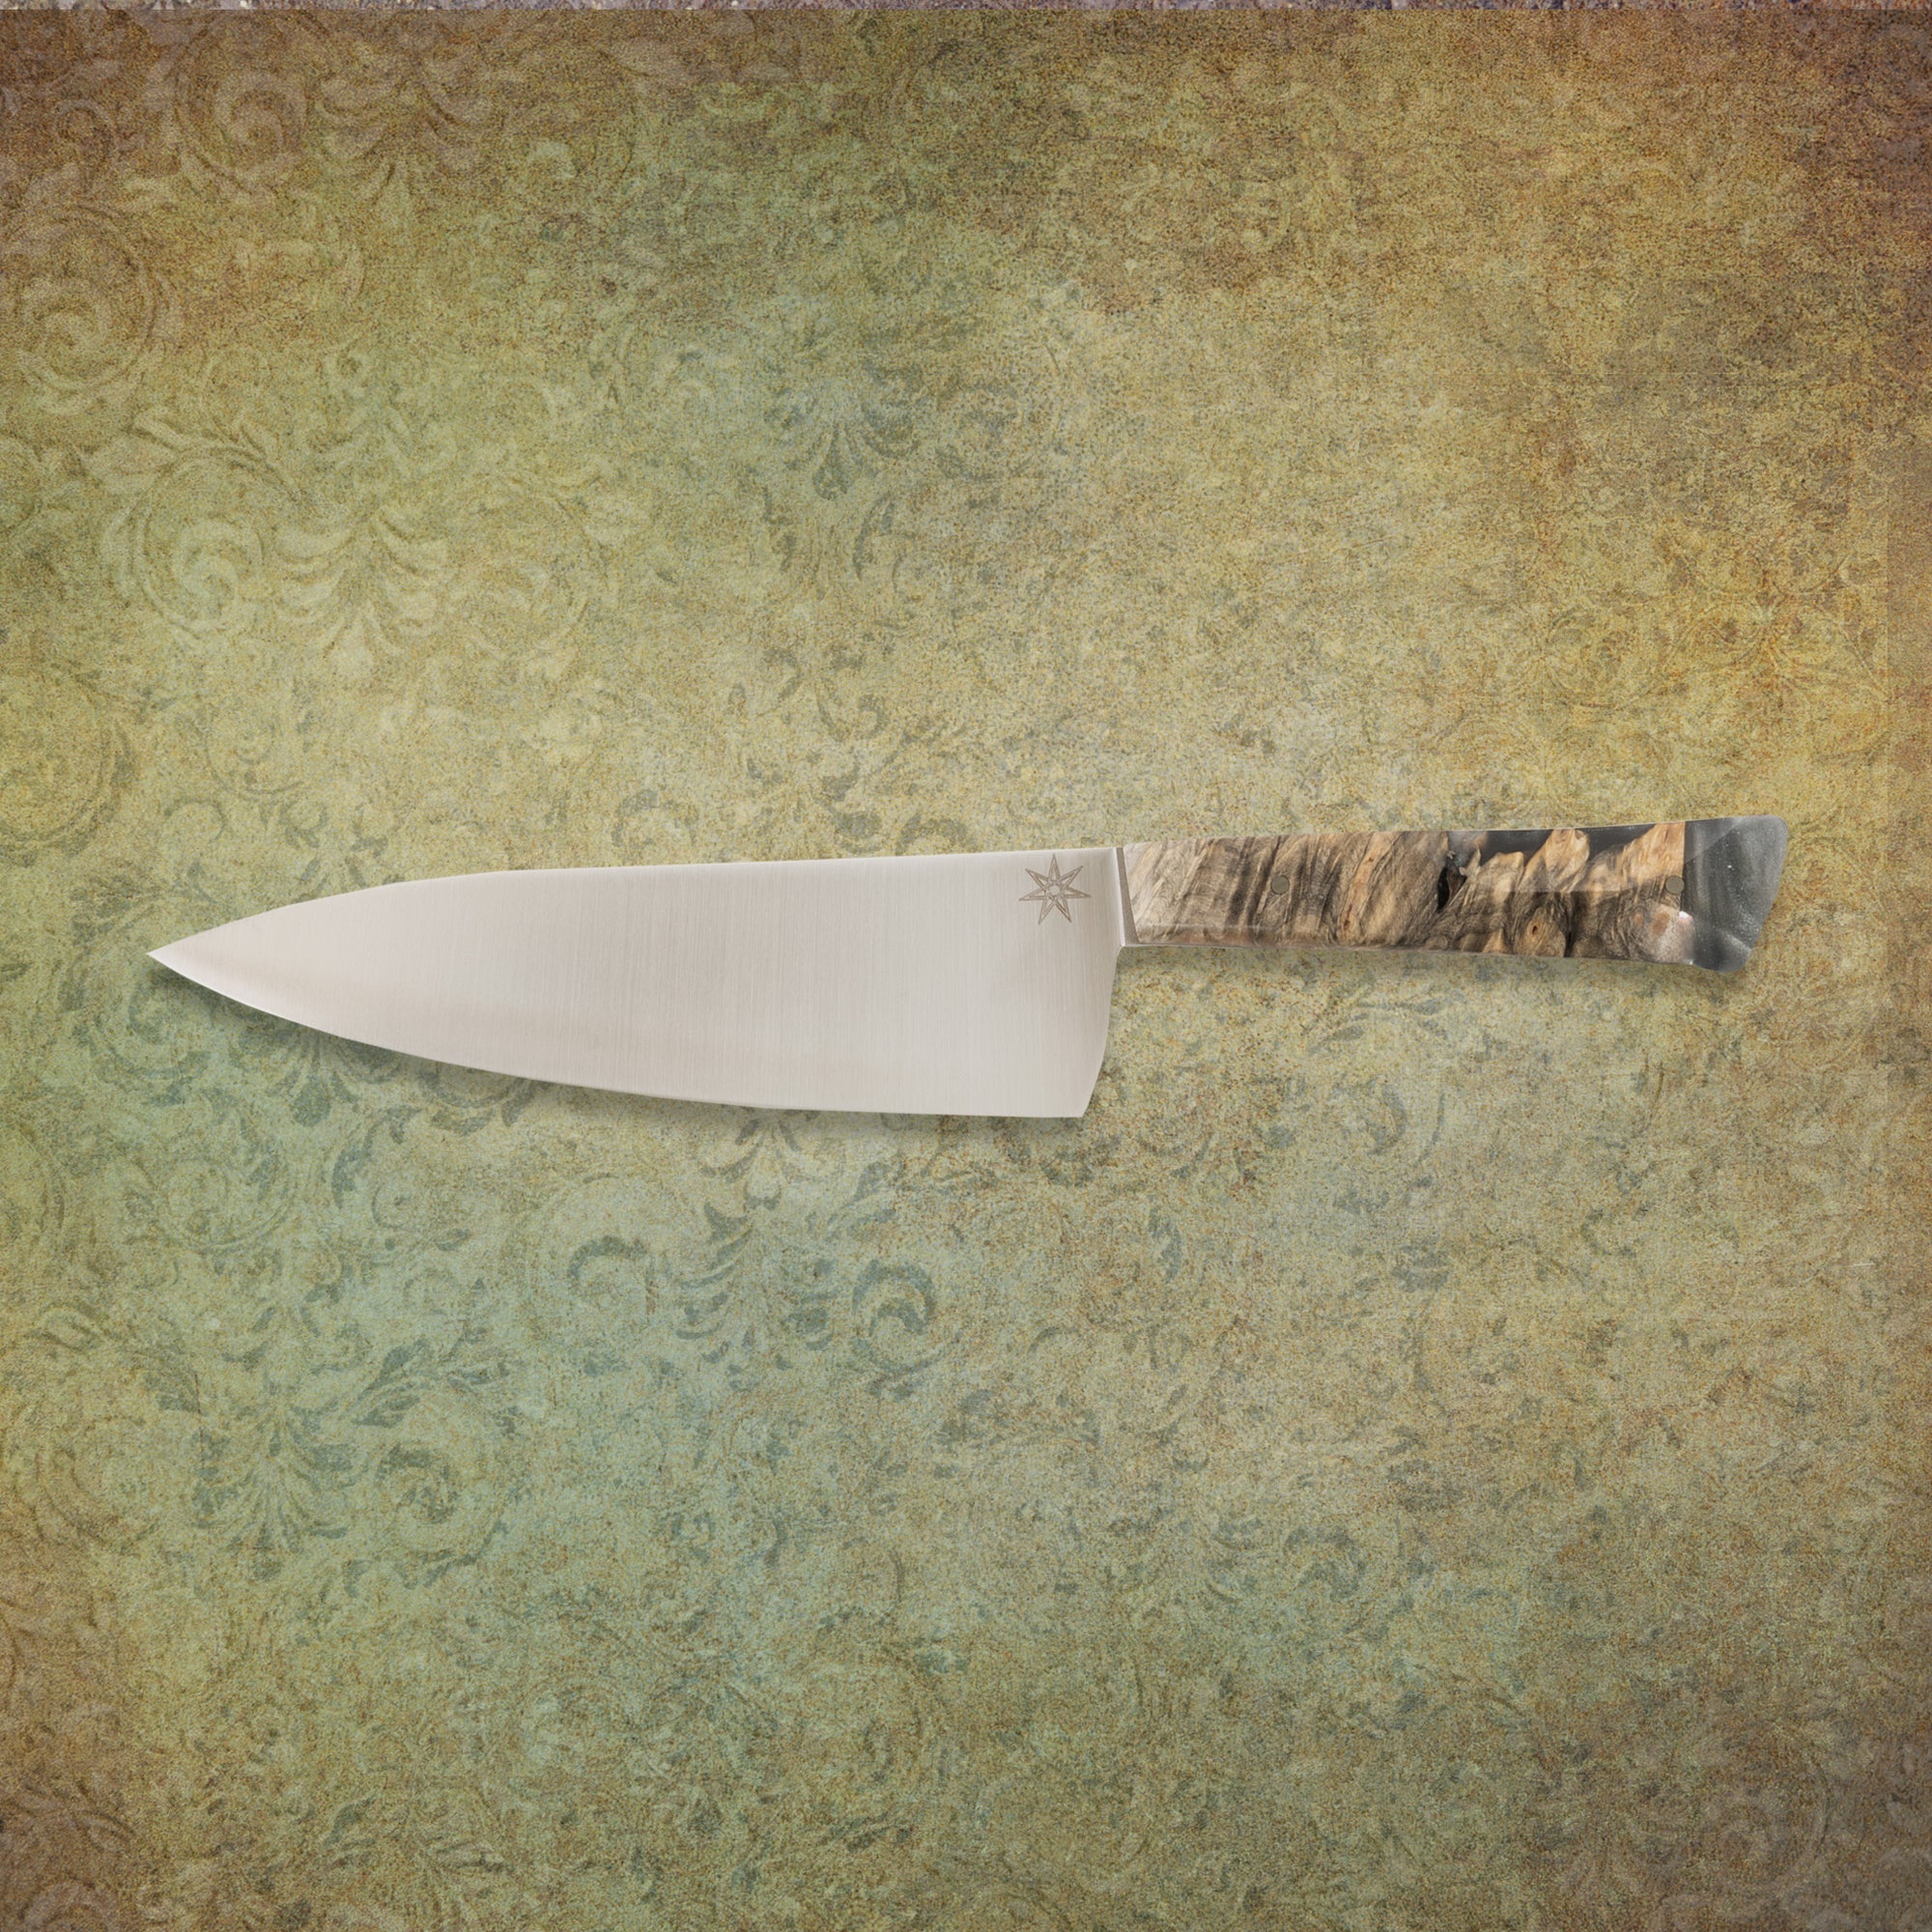 7" Chef Knife - Ag 47